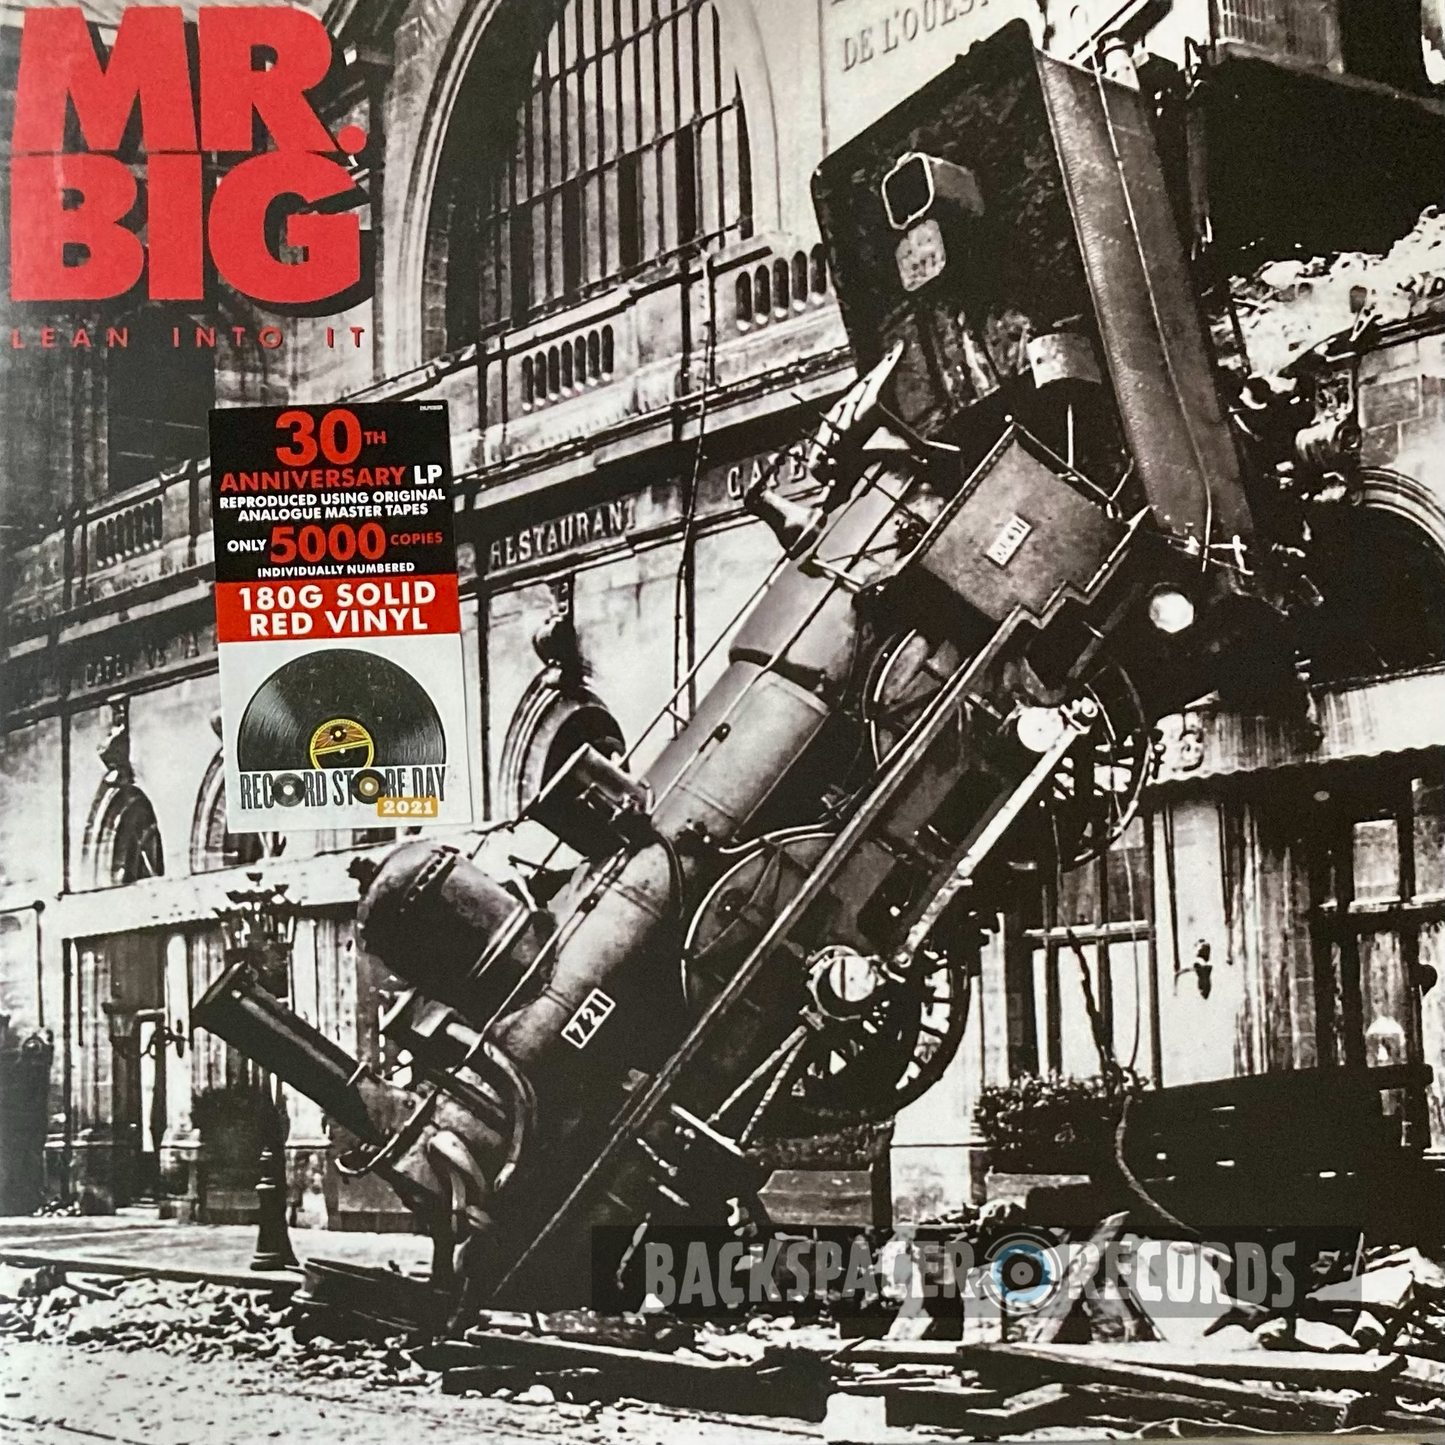 Mr Big - Lean Into It (30th Anniversary) LP (Limited Edition)